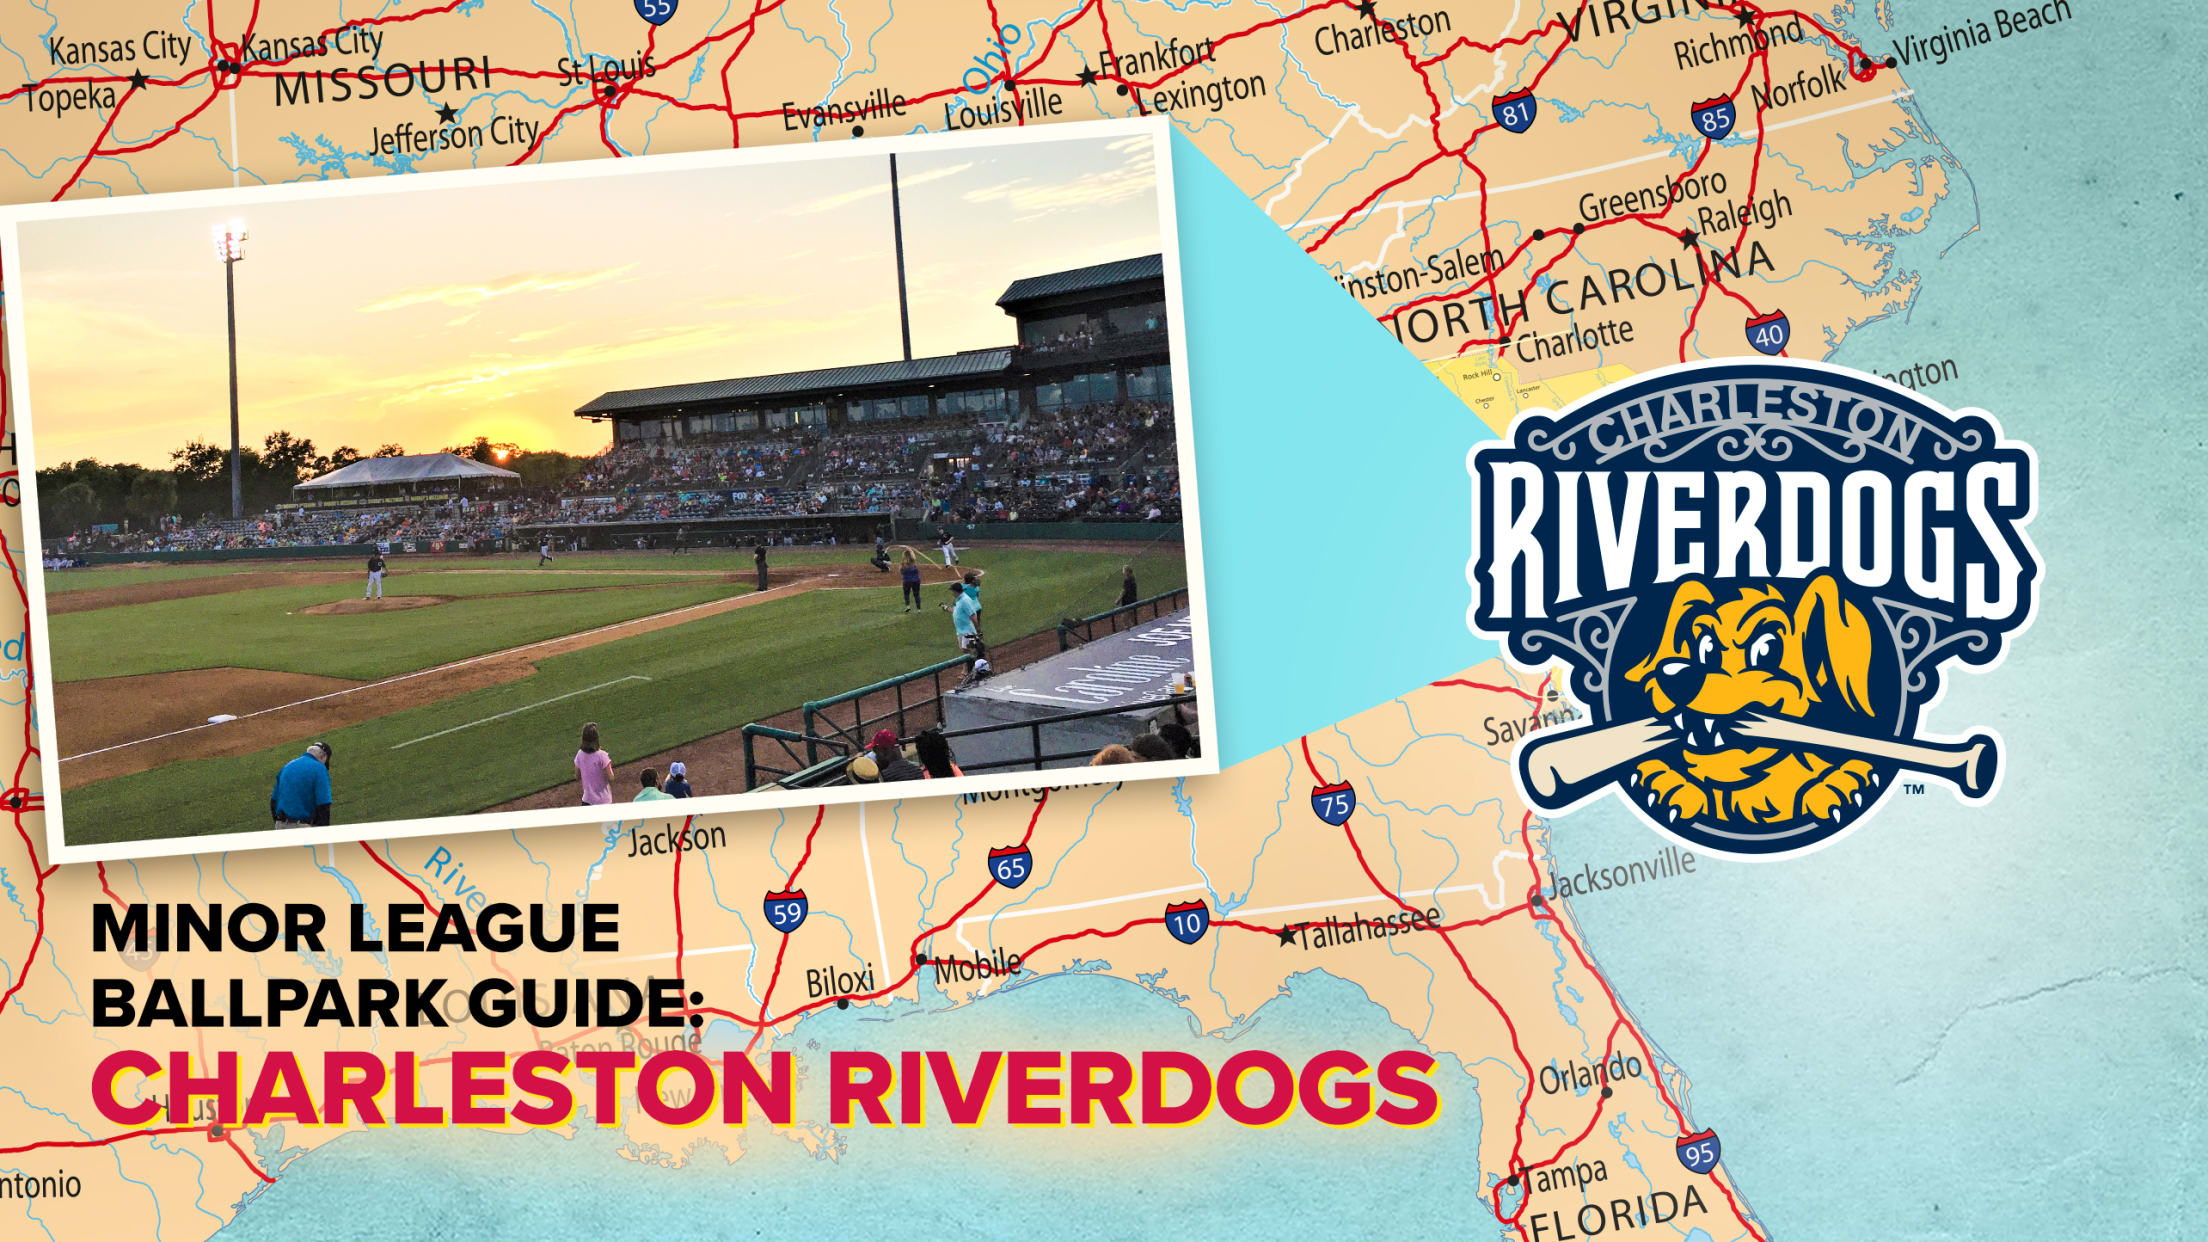 2568x1445-Stadium_Map_Charleston_RiverDogs - Copy